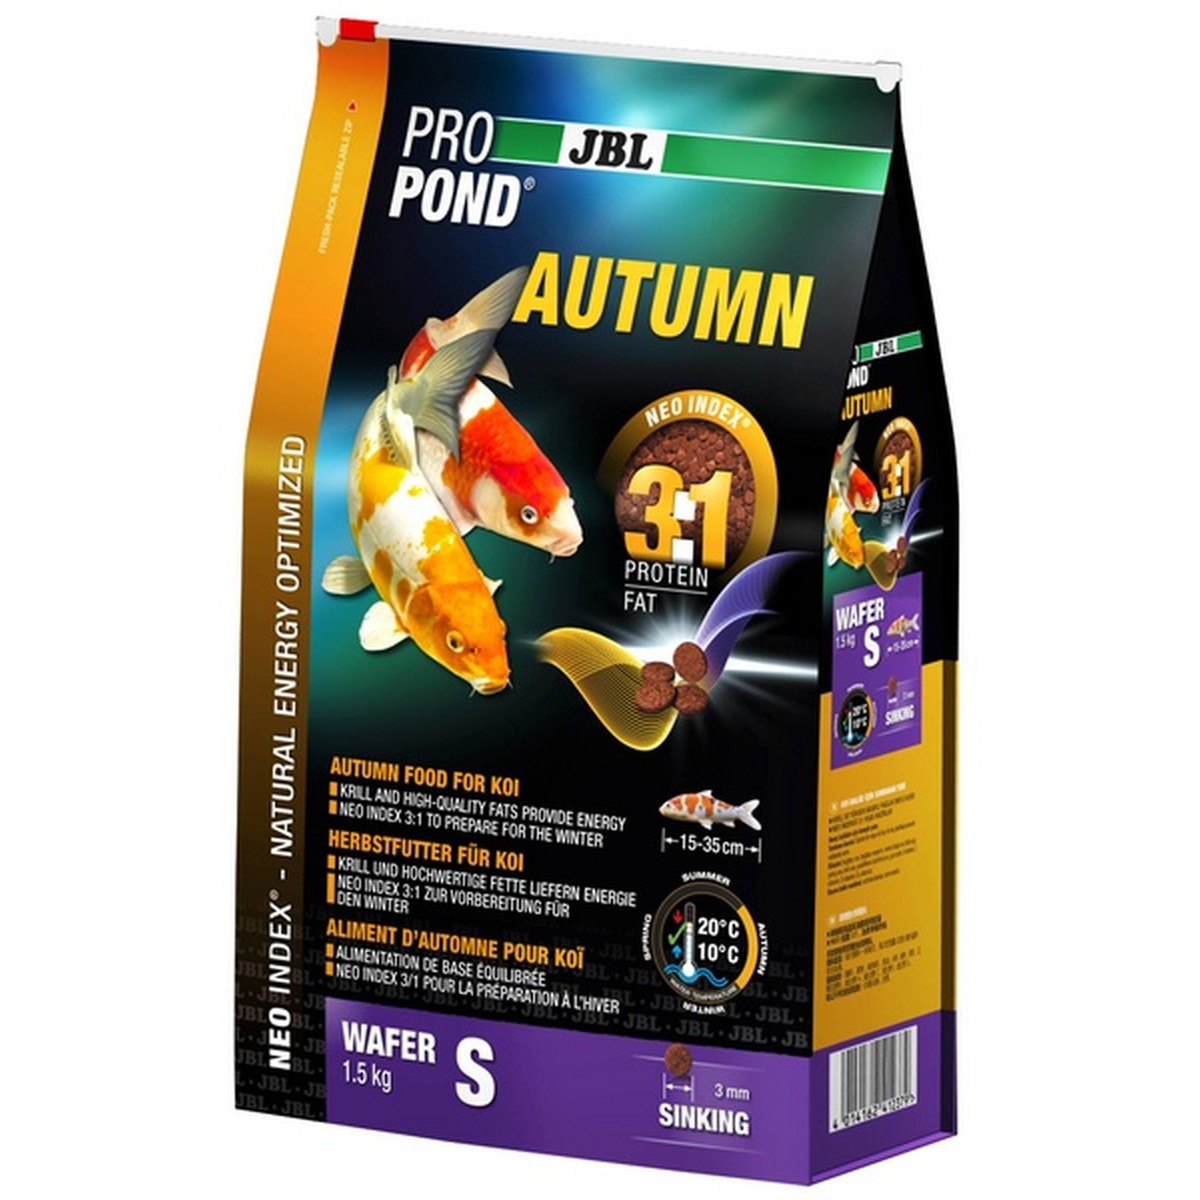   JBL ProPond Autumn S, 1,5 kg  1.5kg